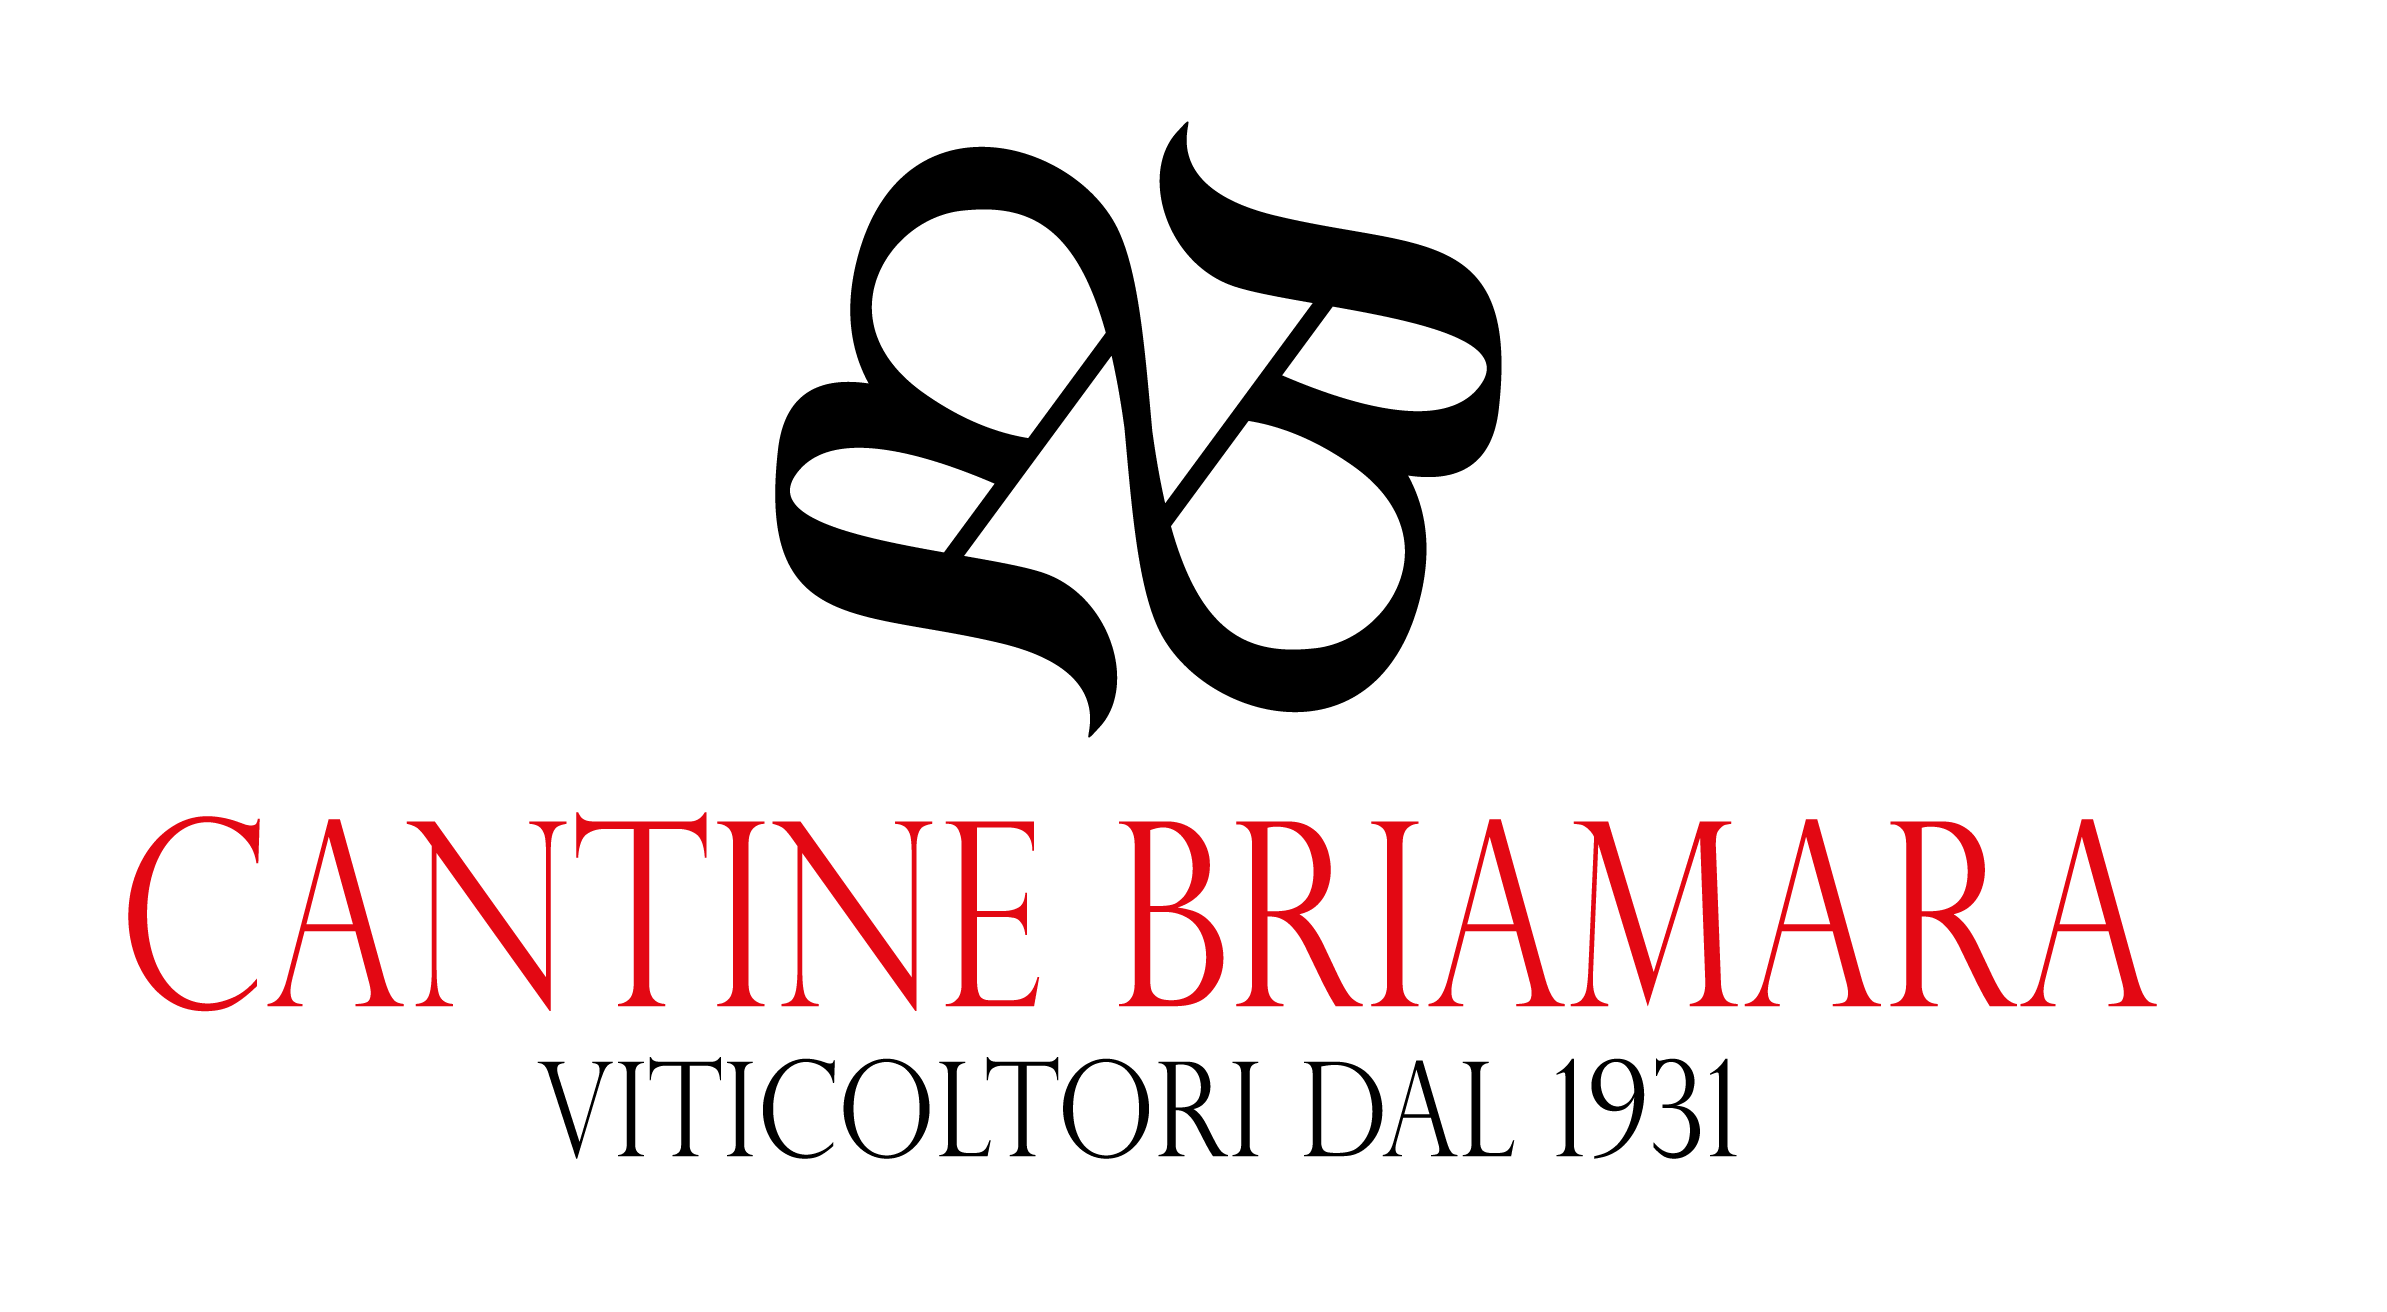 Cantine Briamara